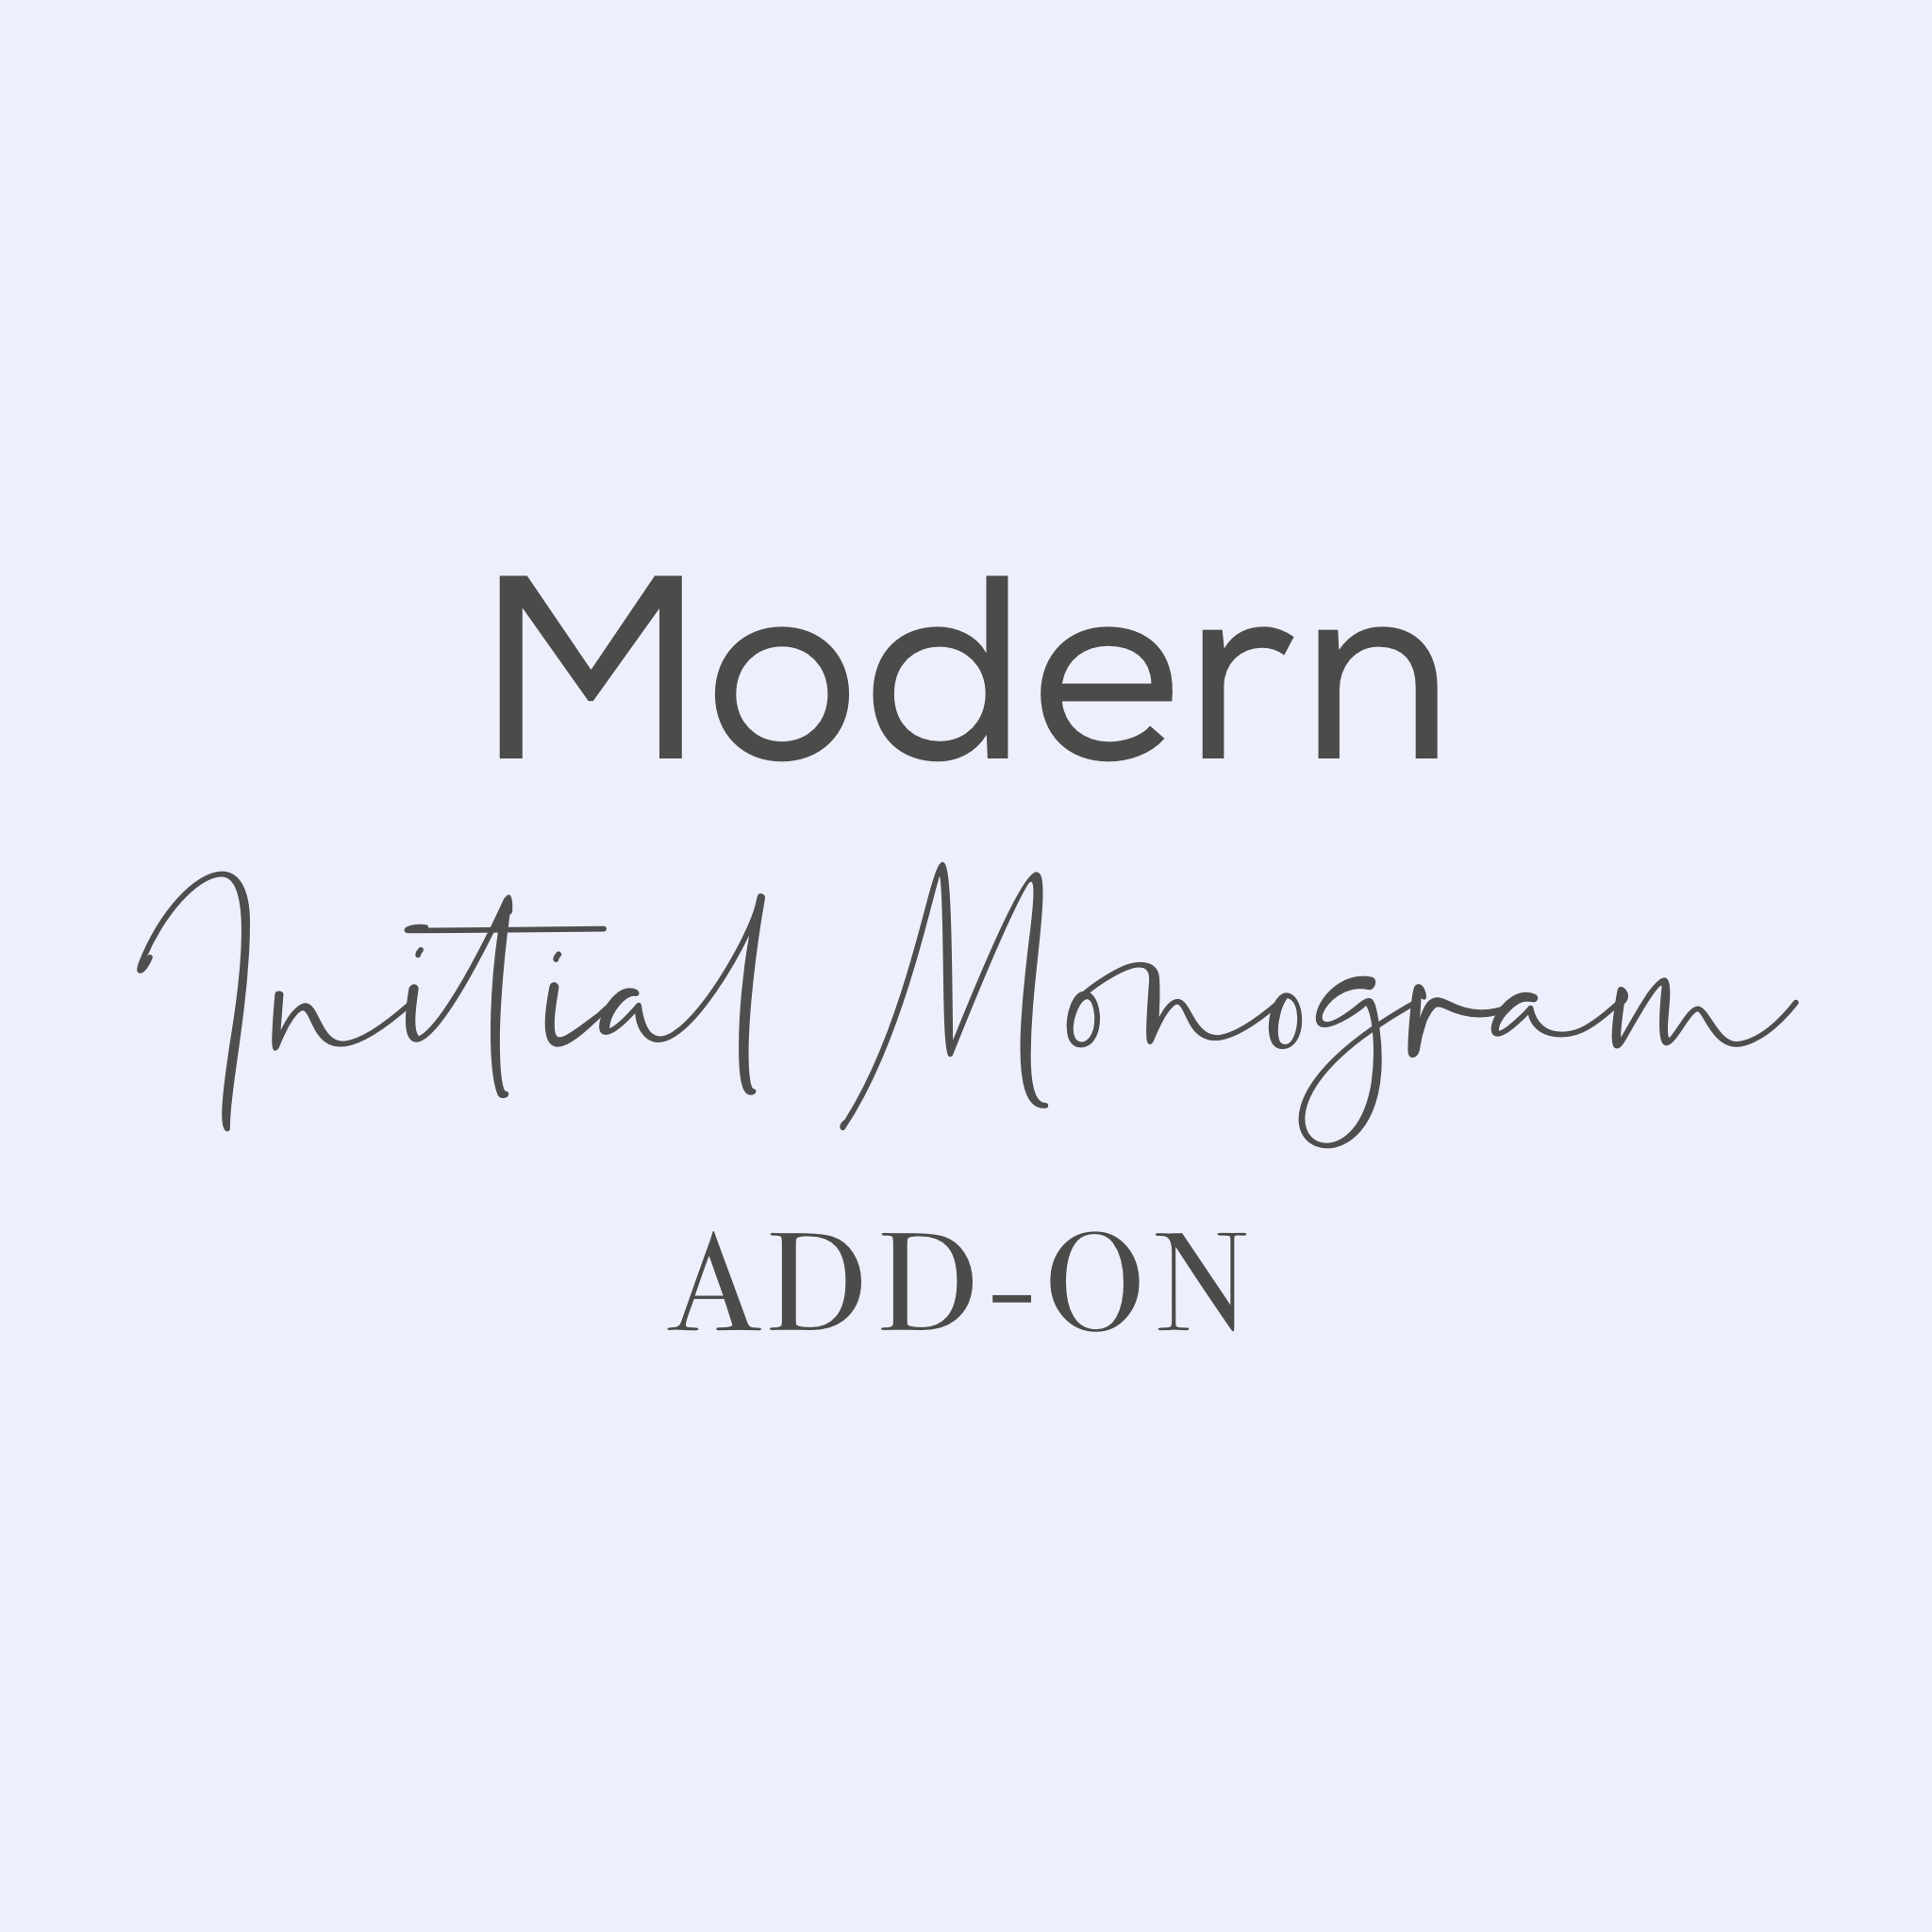 Modern Initial Monogram Add-On